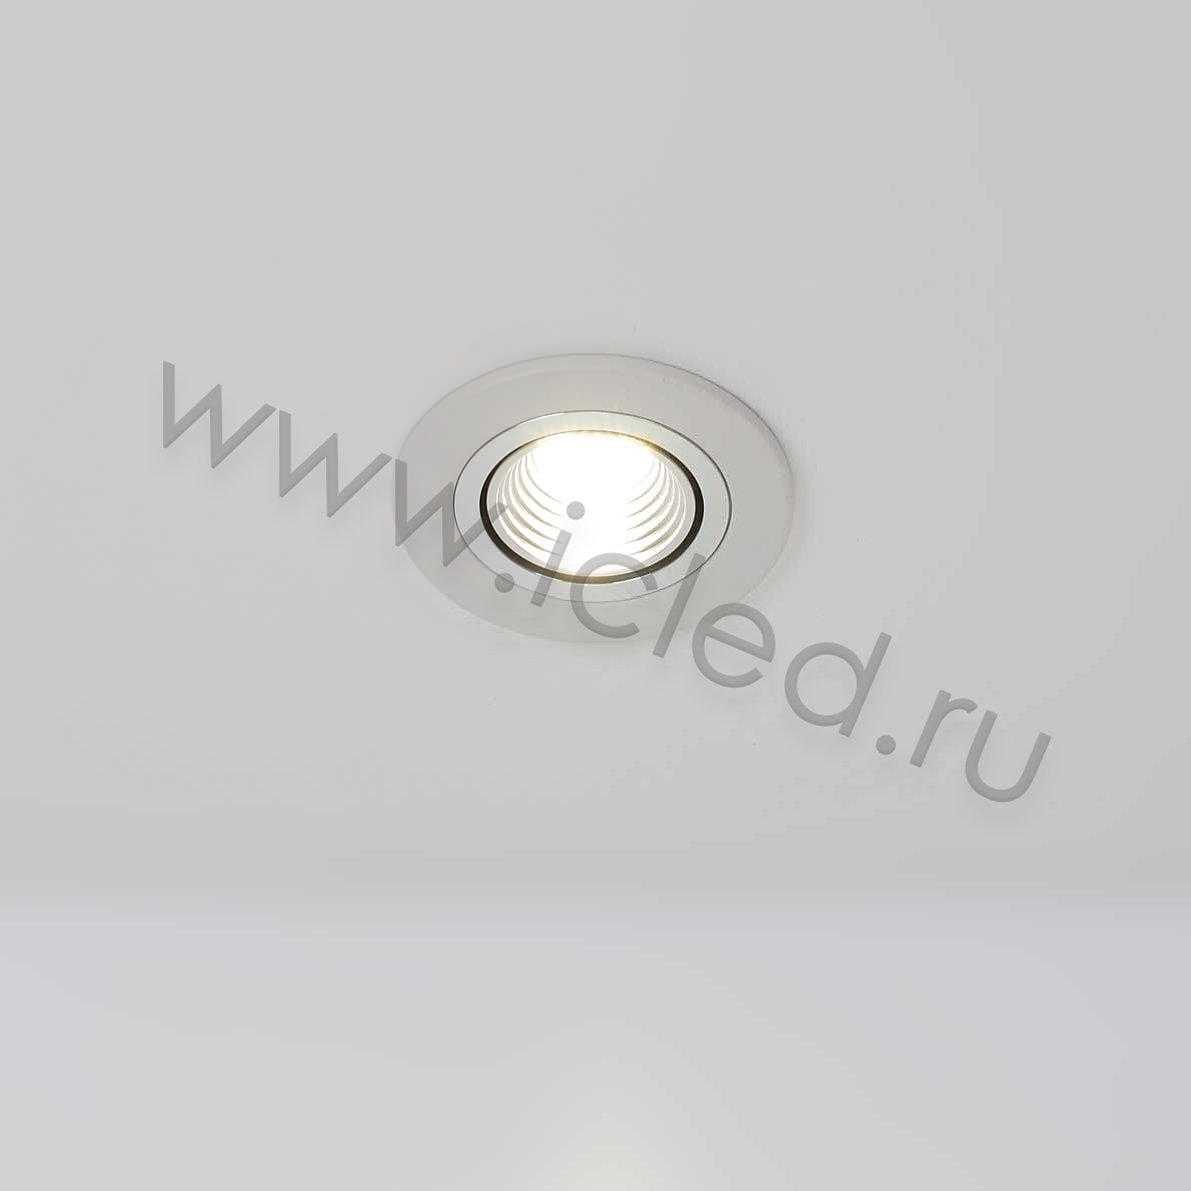 Светодиодные светильники Светодиодный светильник встраиваемый 65 Series white housing BW1 (3W,220V,day white)